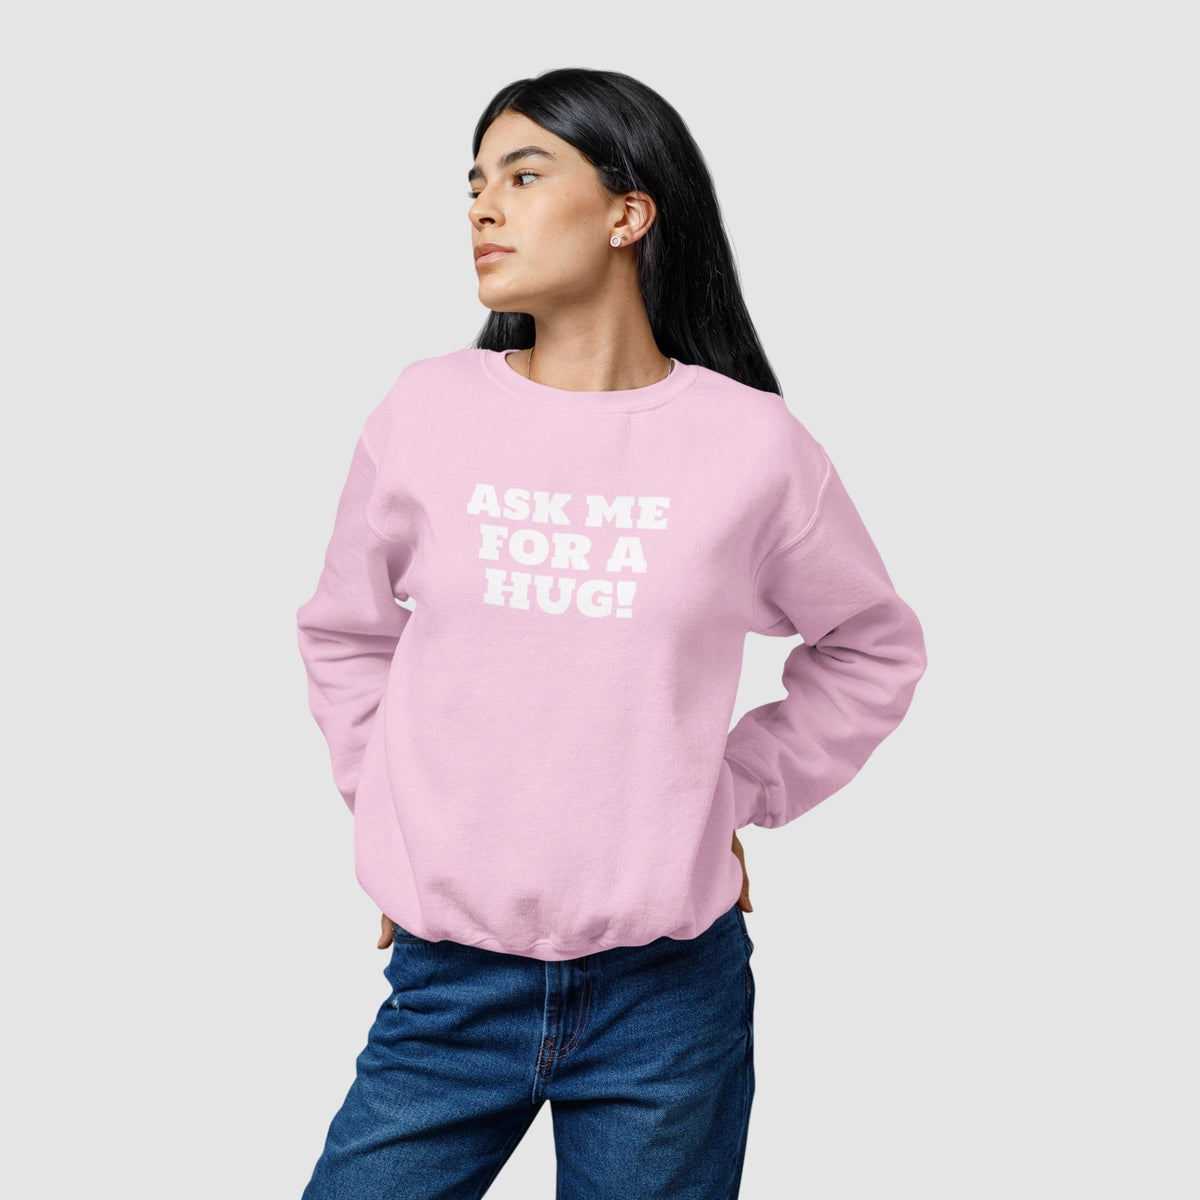 ask-me-for-a-hug-cotton-printed-unisex-light-pink-female-model-sweatshirt-gogirgit-com